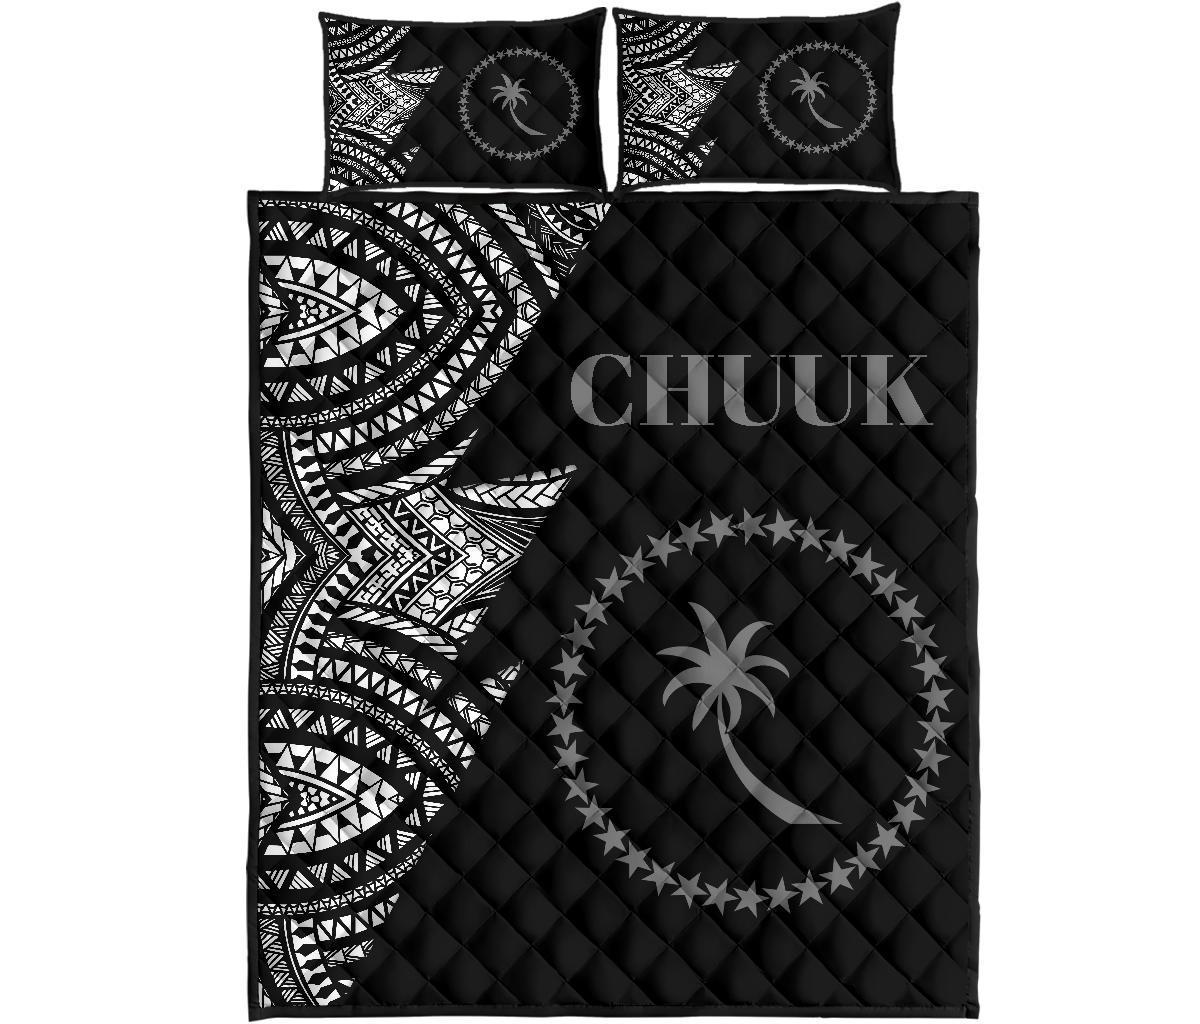 Chuuk Quilt Bed Set - Chuuk Flag Flash Version Black - Polynesian Pride